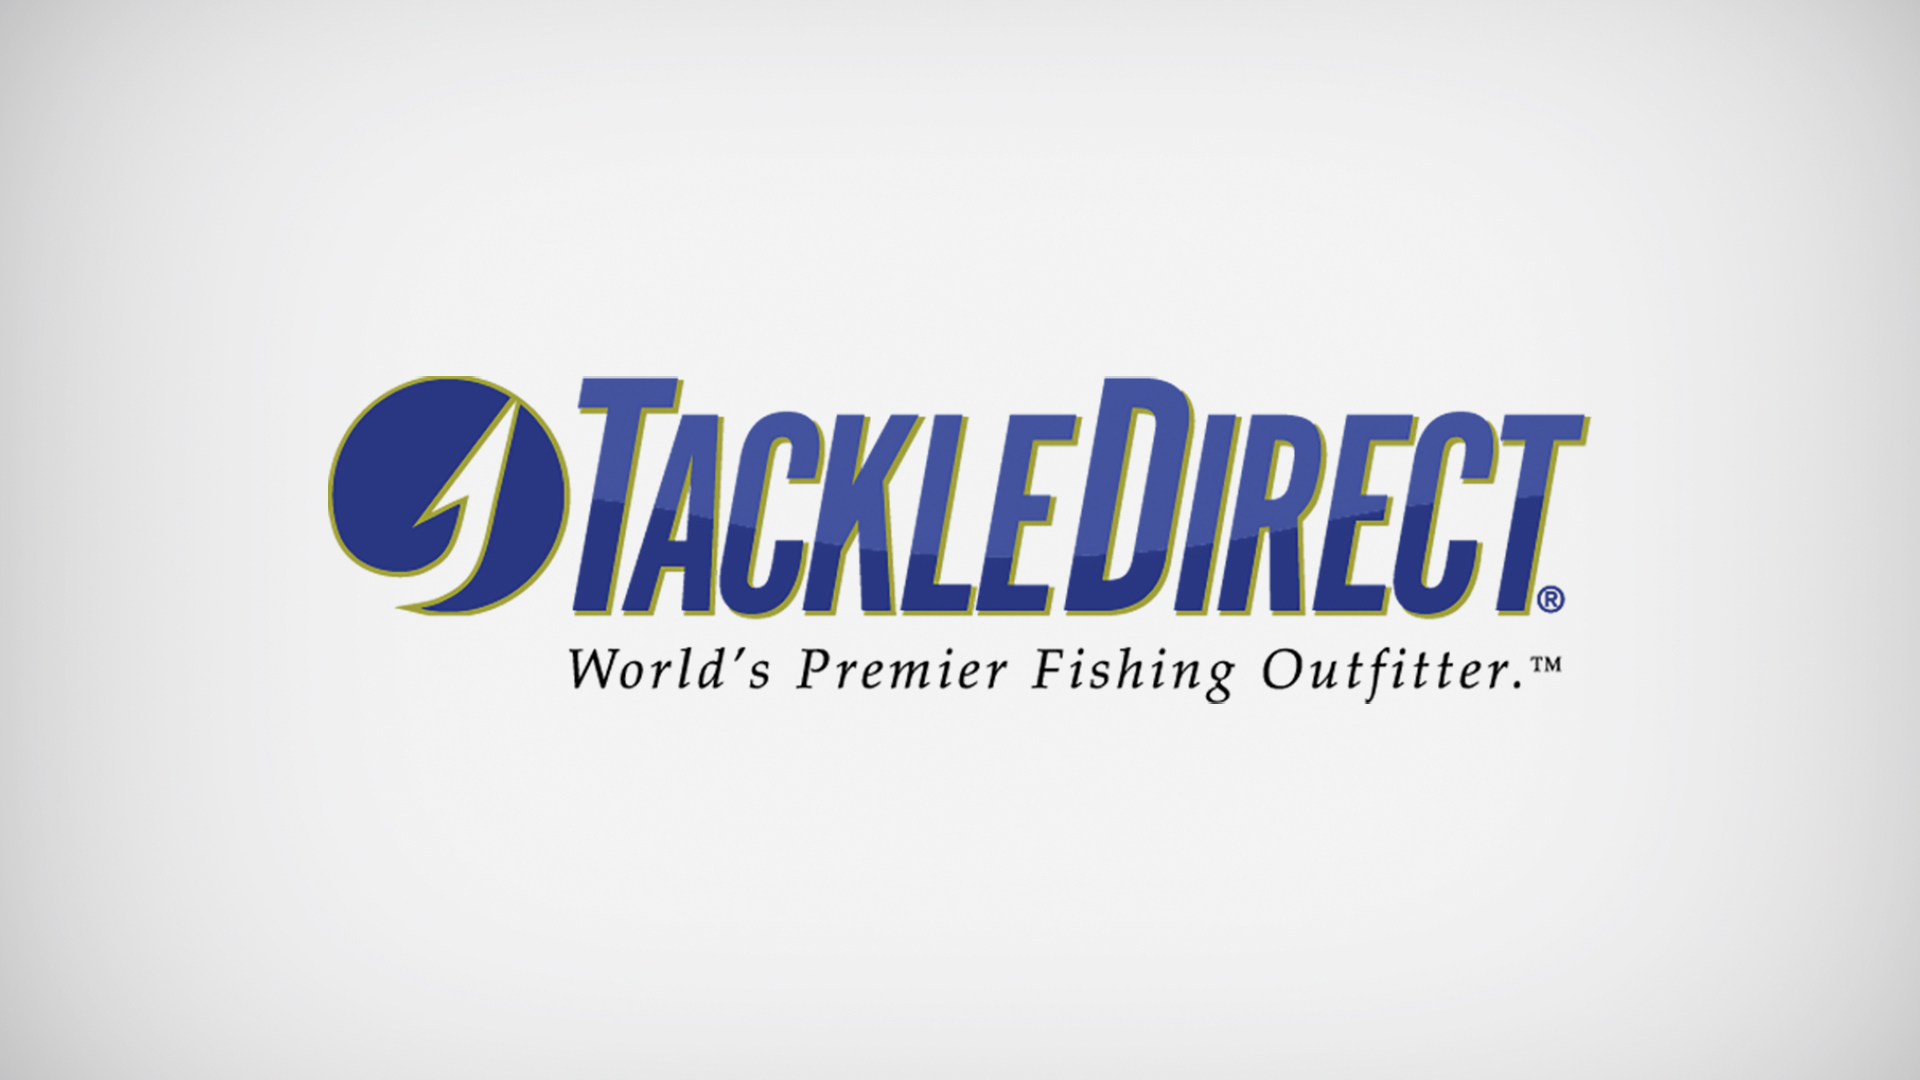 Tackle Direct Logo Development